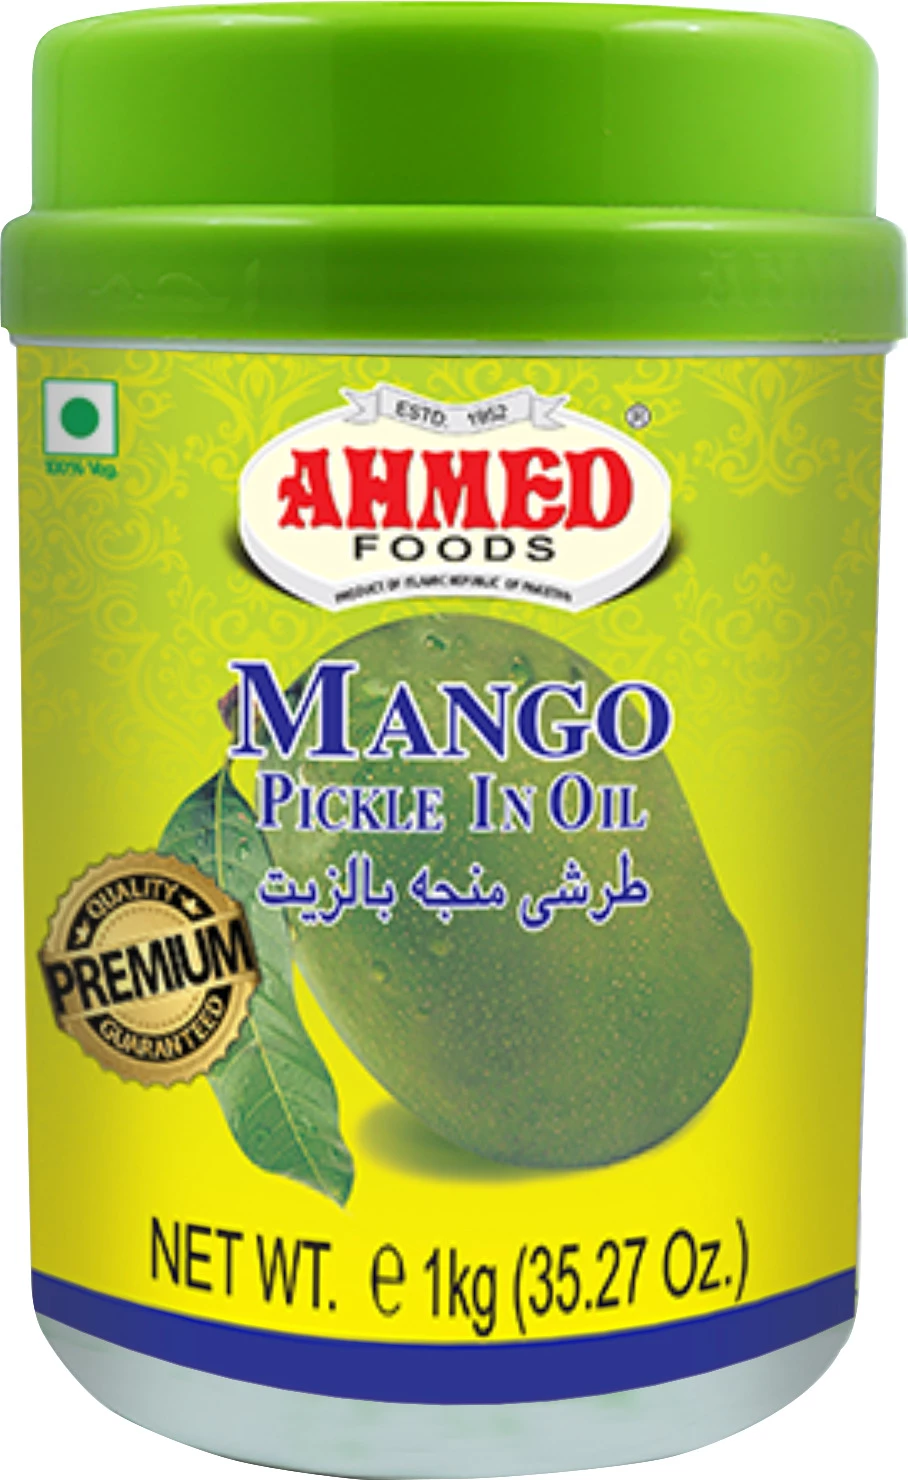 Mango Pickle In Oil 6 X 1 Kg - Ahmed